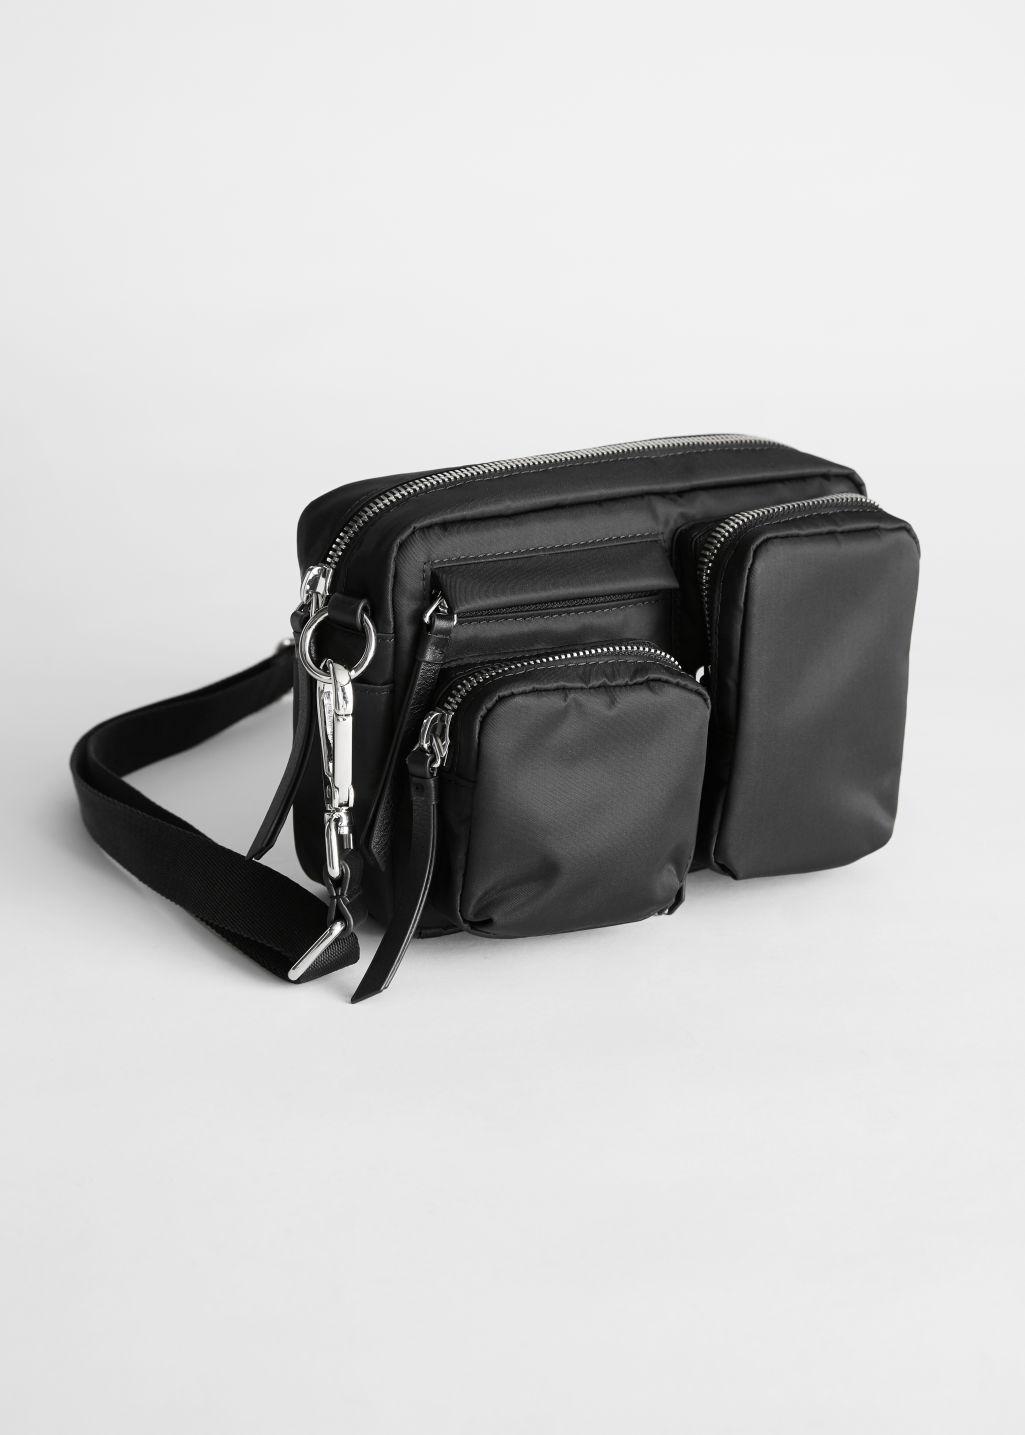 & Other Stories Nylon Multi Pocket Crossbody Bag in Black | Lyst